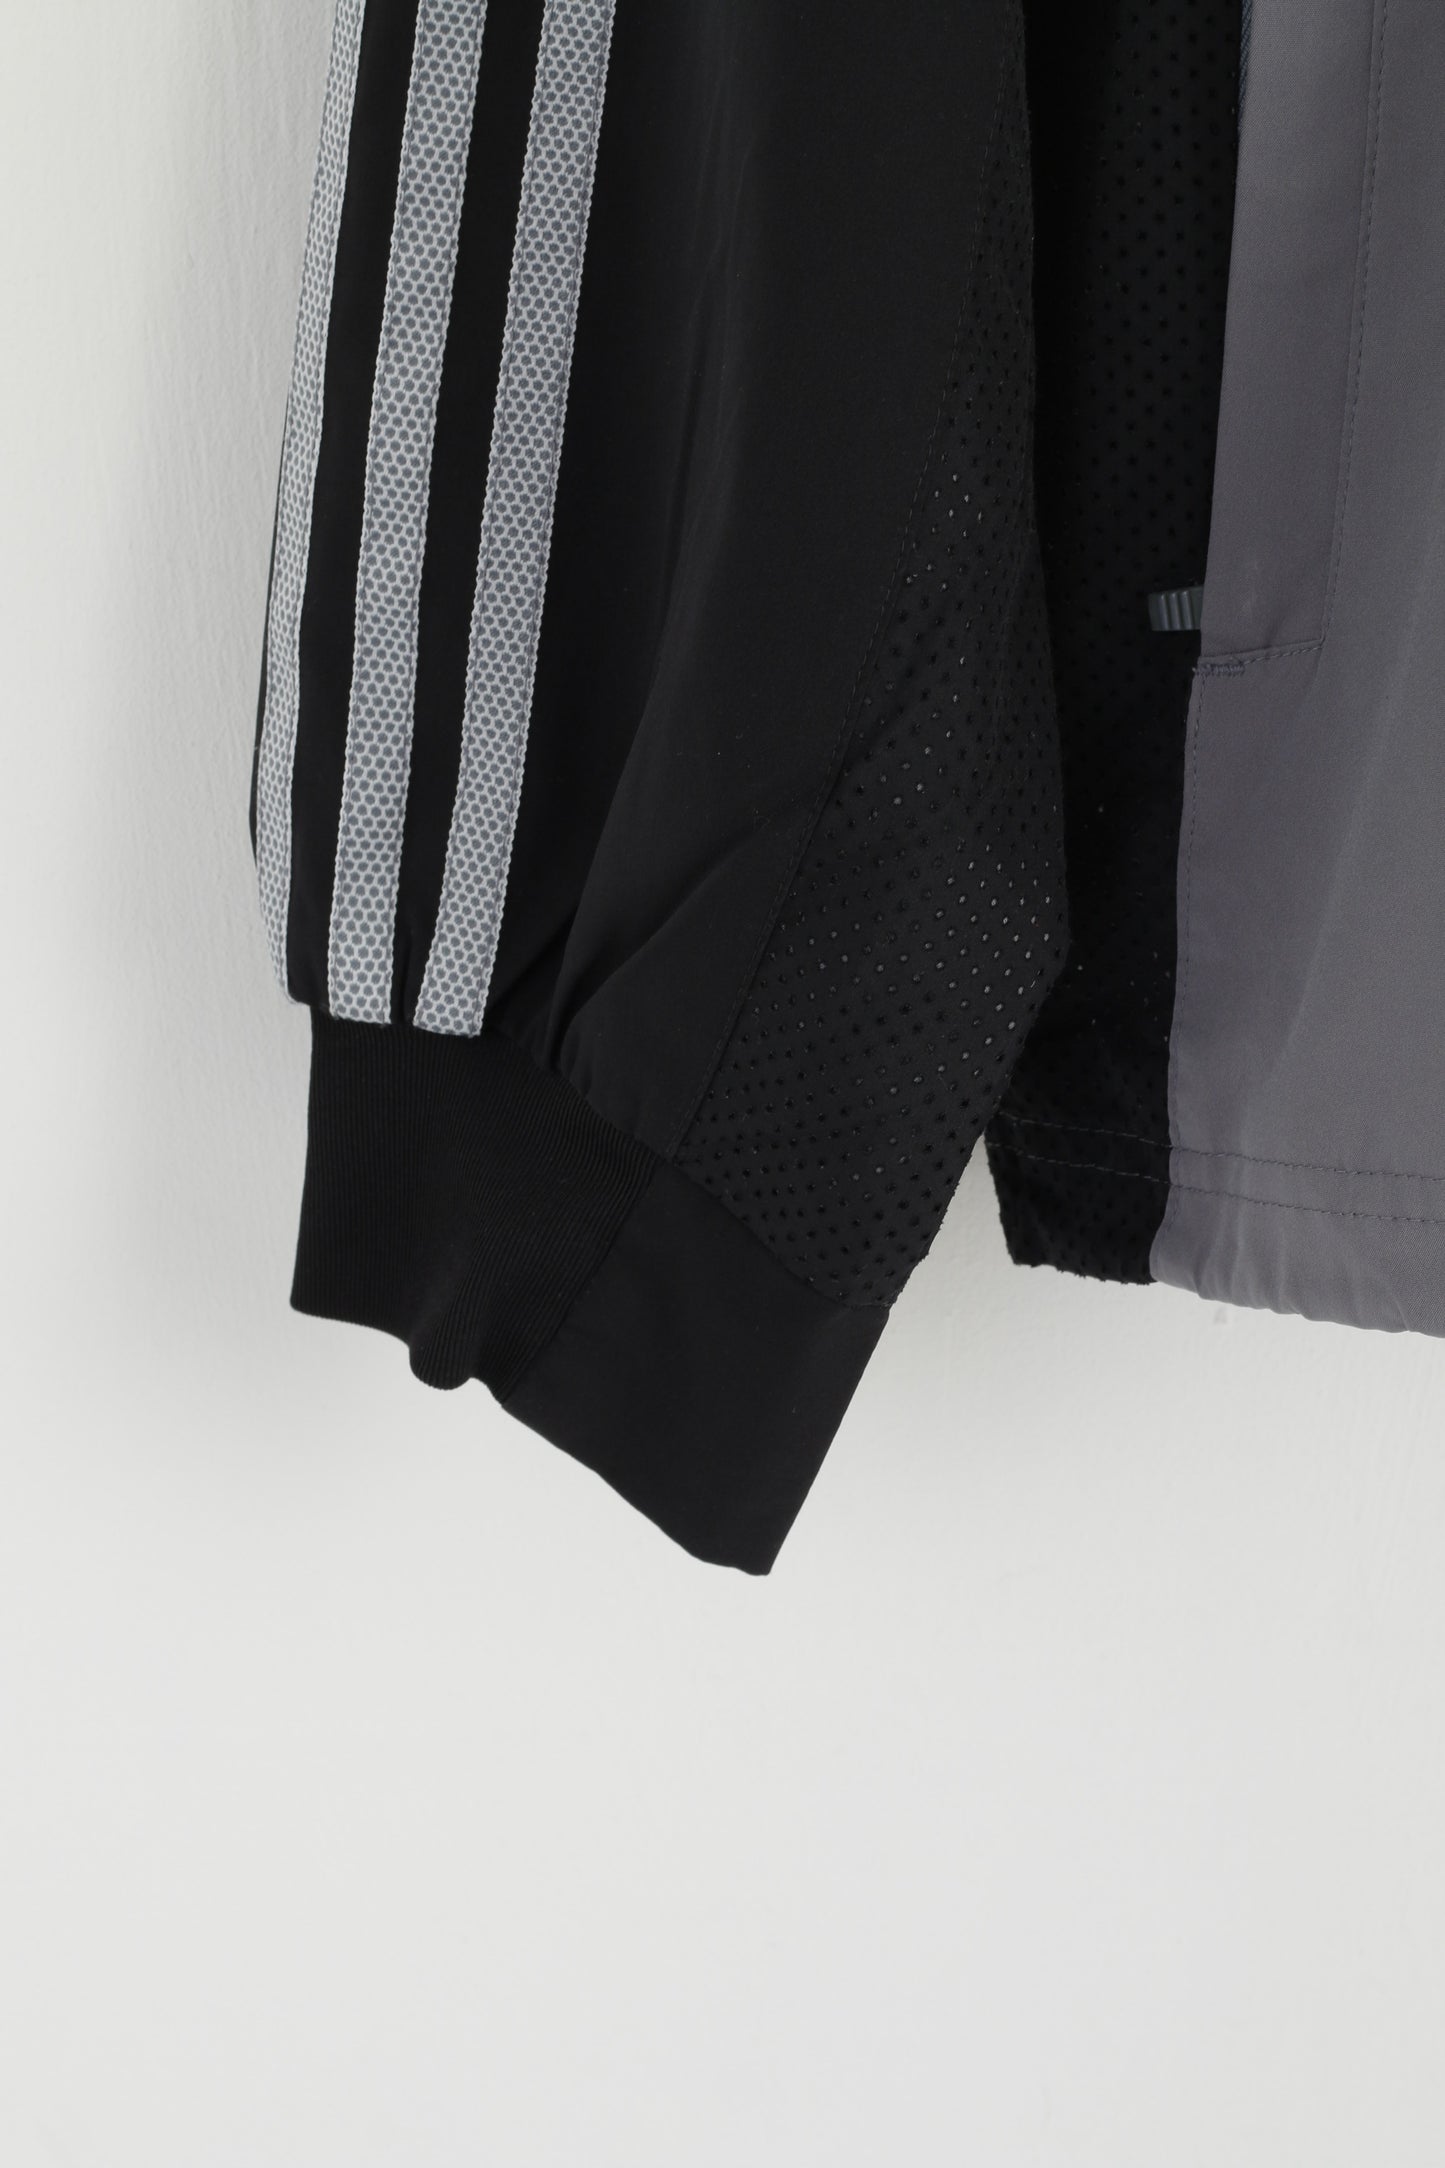 Adidas Men L Jacket Grey Lightweight Climacool Activewear Bomber Zip Up Top